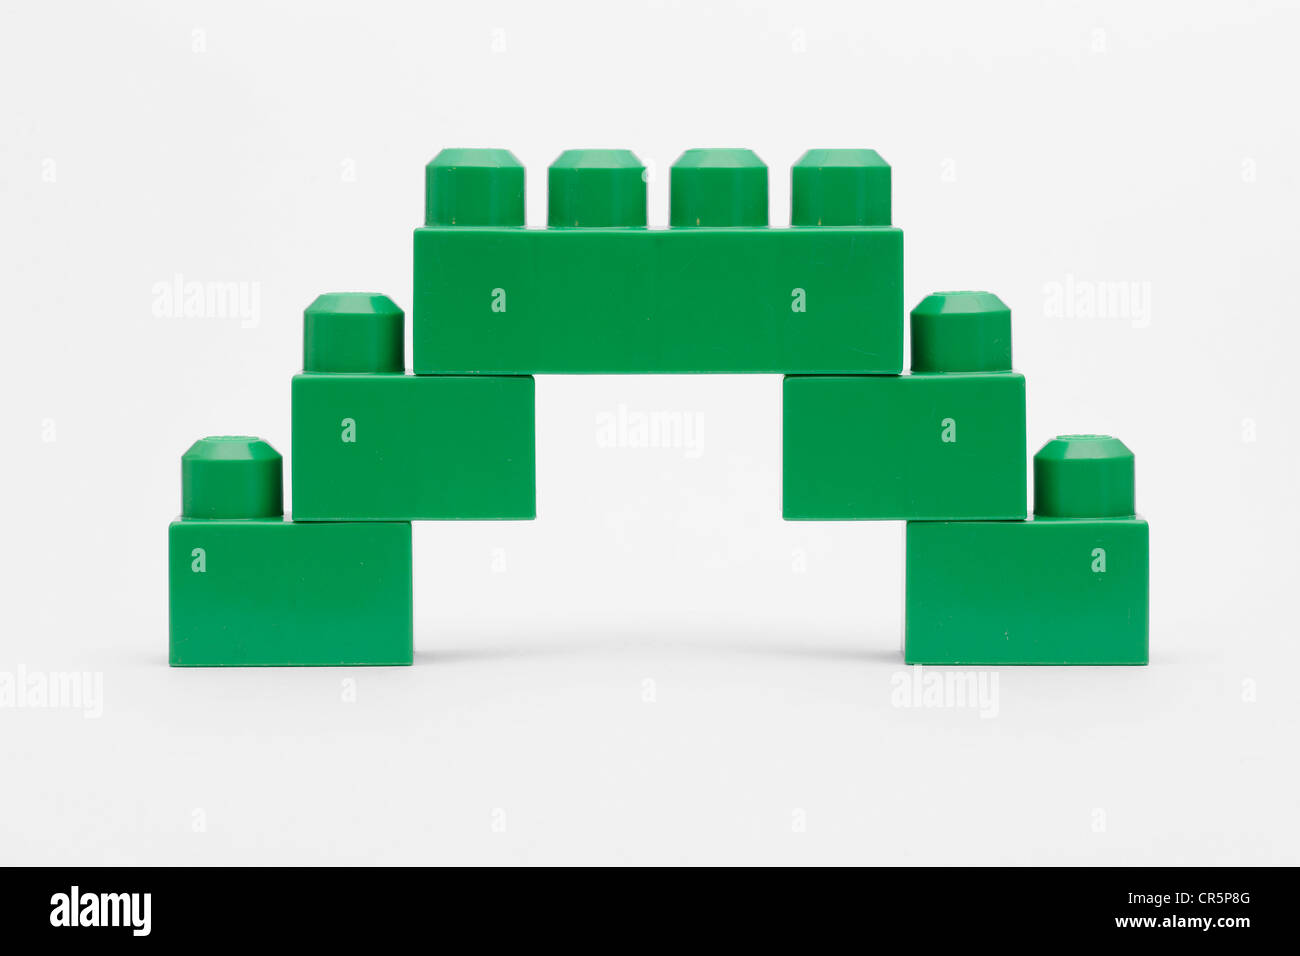 Green bridge made of Lego bricks Stock Photo